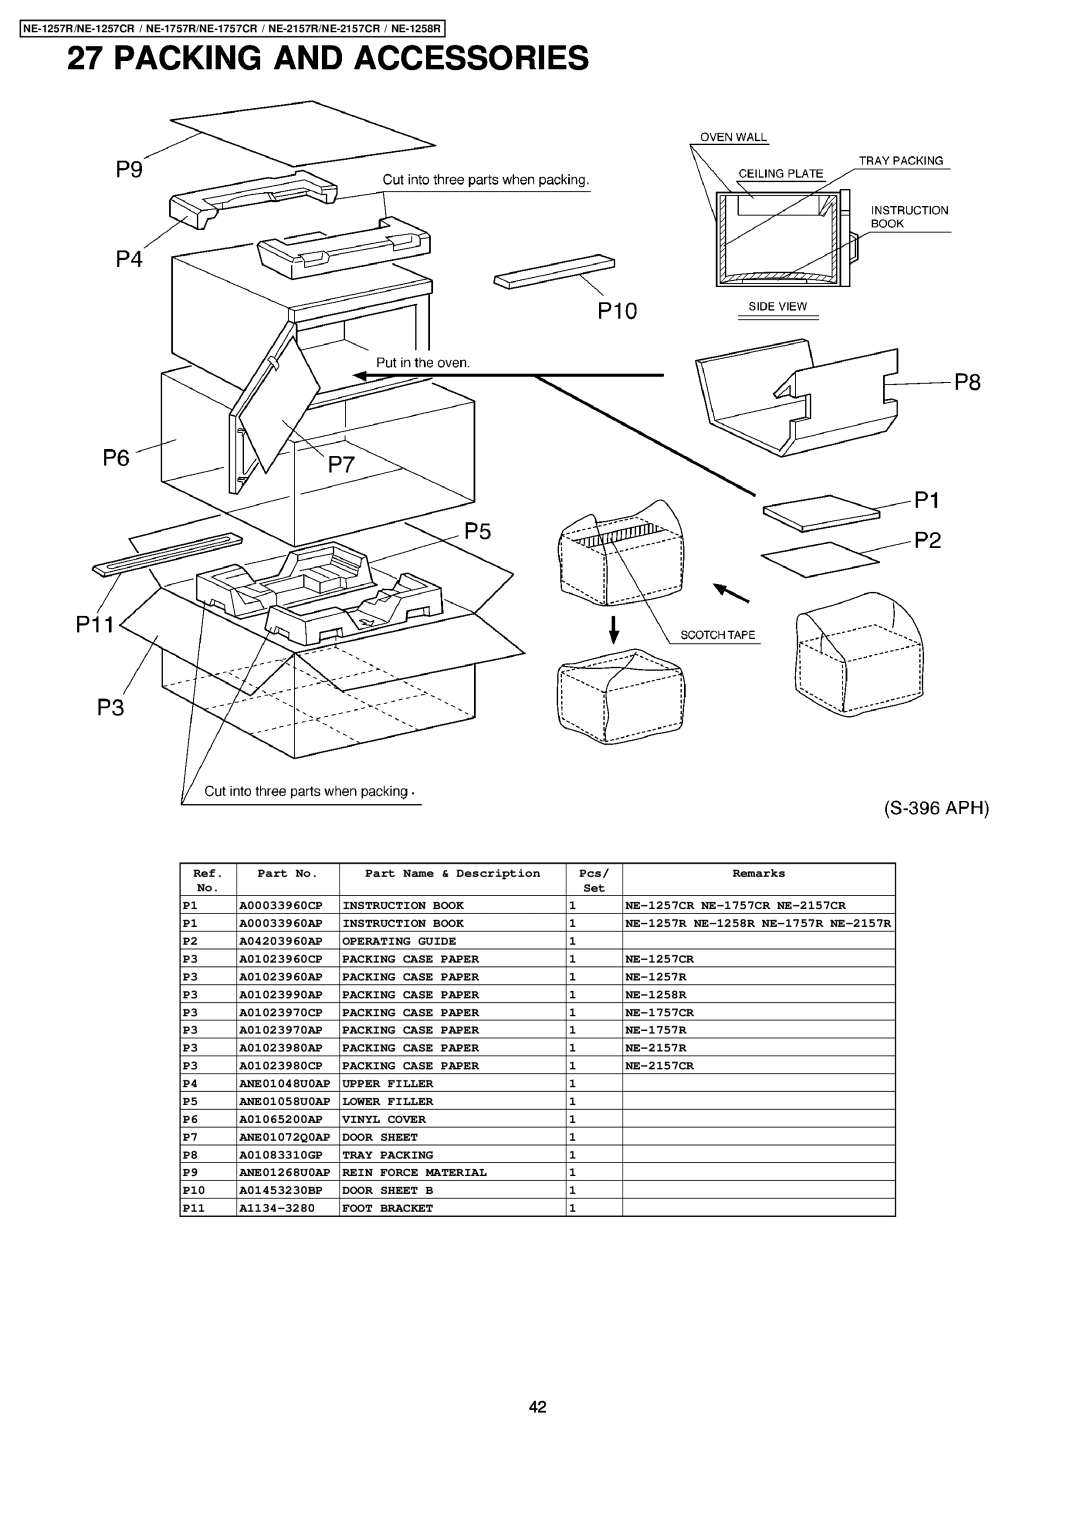 Panasonic NE-2157CR, NE-1757CR, NE-1257CR manual Packing And Accessories 